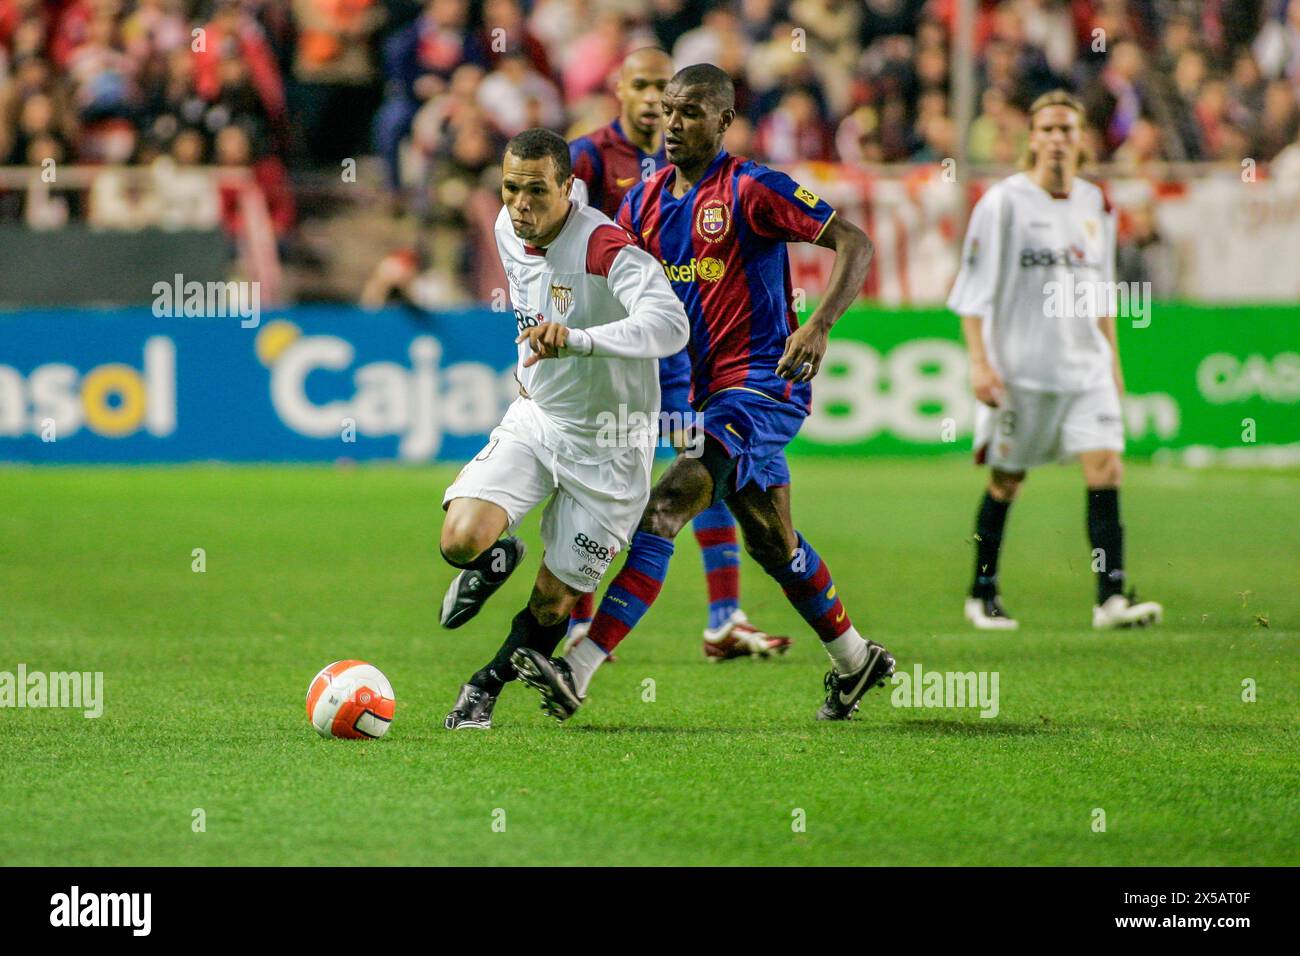 Luis Fabiano deftly maneuvers around Eric Abidal in a tense Sevilla-Barcelona match. Stock Photo